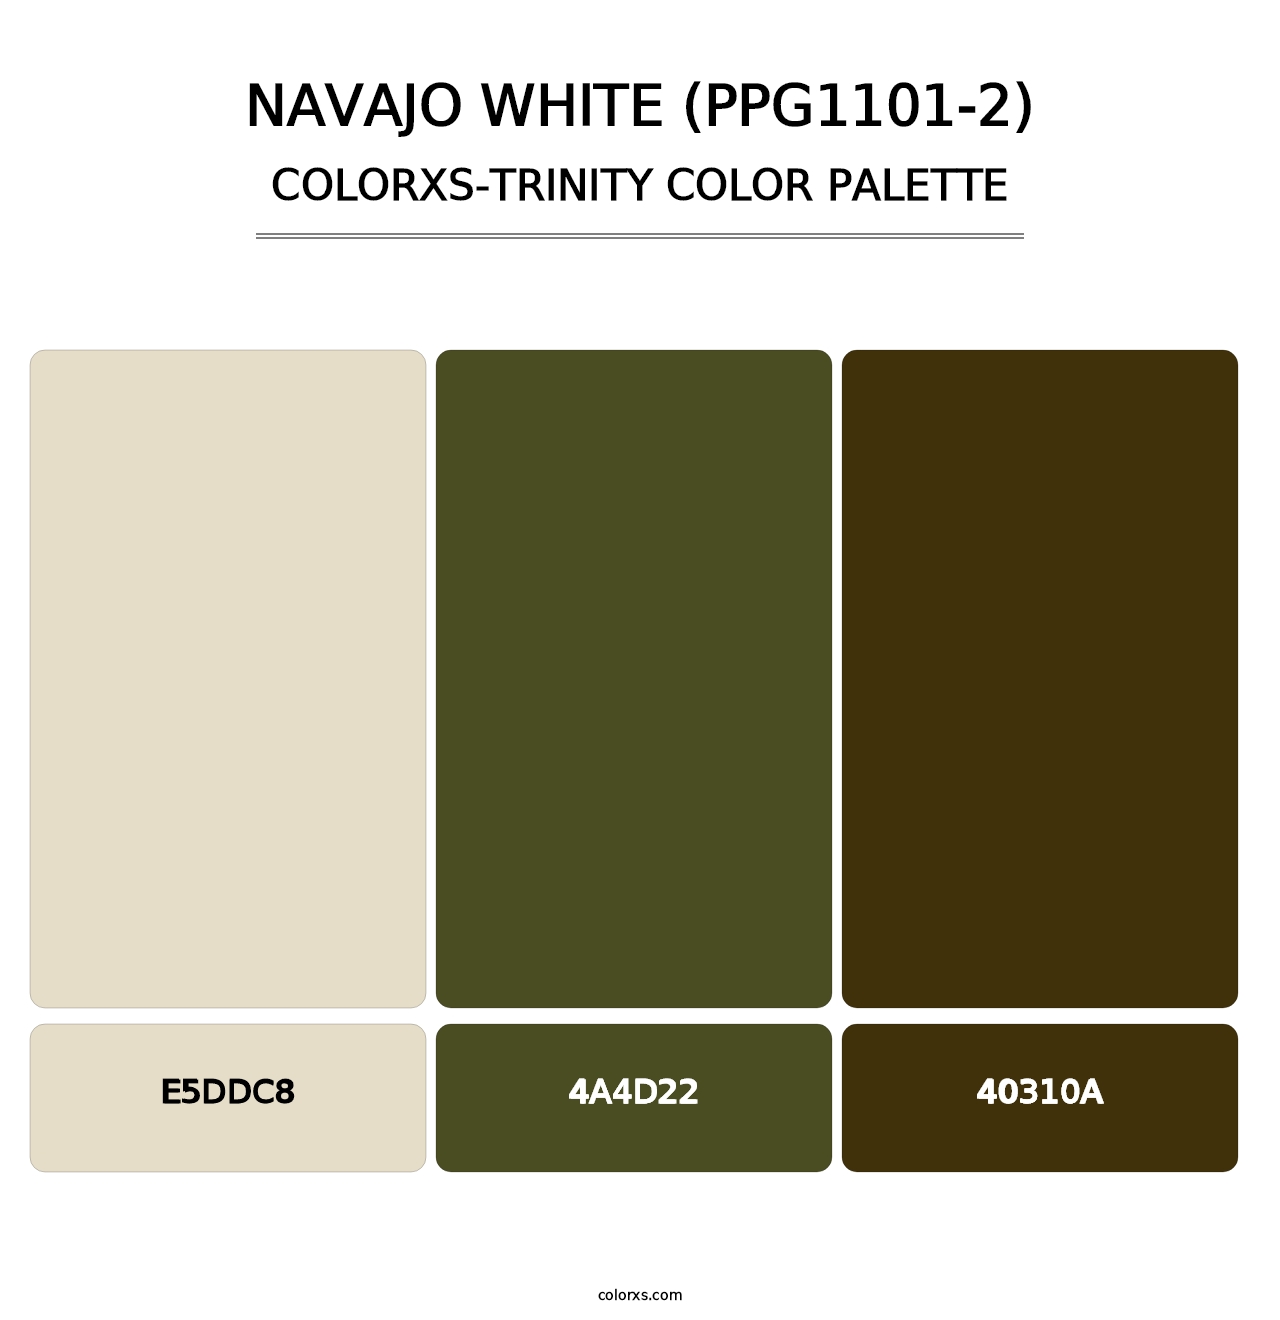 Navajo White (PPG1101-2) - Colorxs Trinity Palette